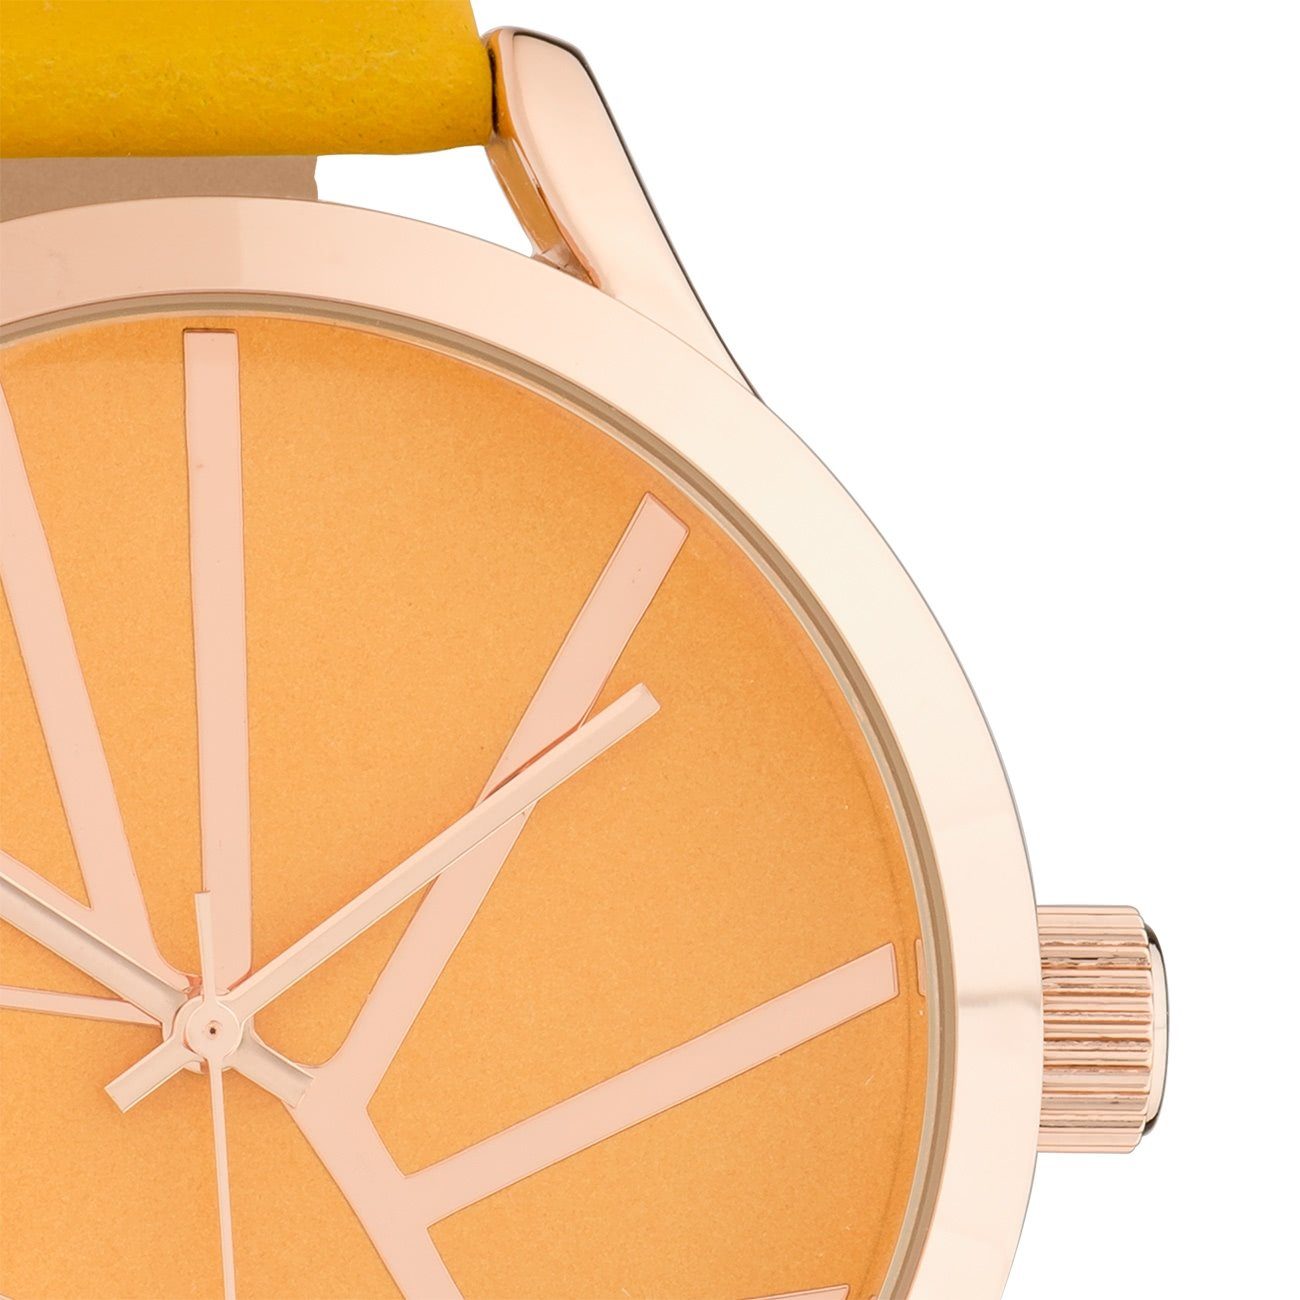 Damenuhr gelb, Fashion Quarzuhr Armbanduhr rund, Oozoo OOZOO (ca. Damen Lederarmband 43mm), groß Timepieces, OOZOO